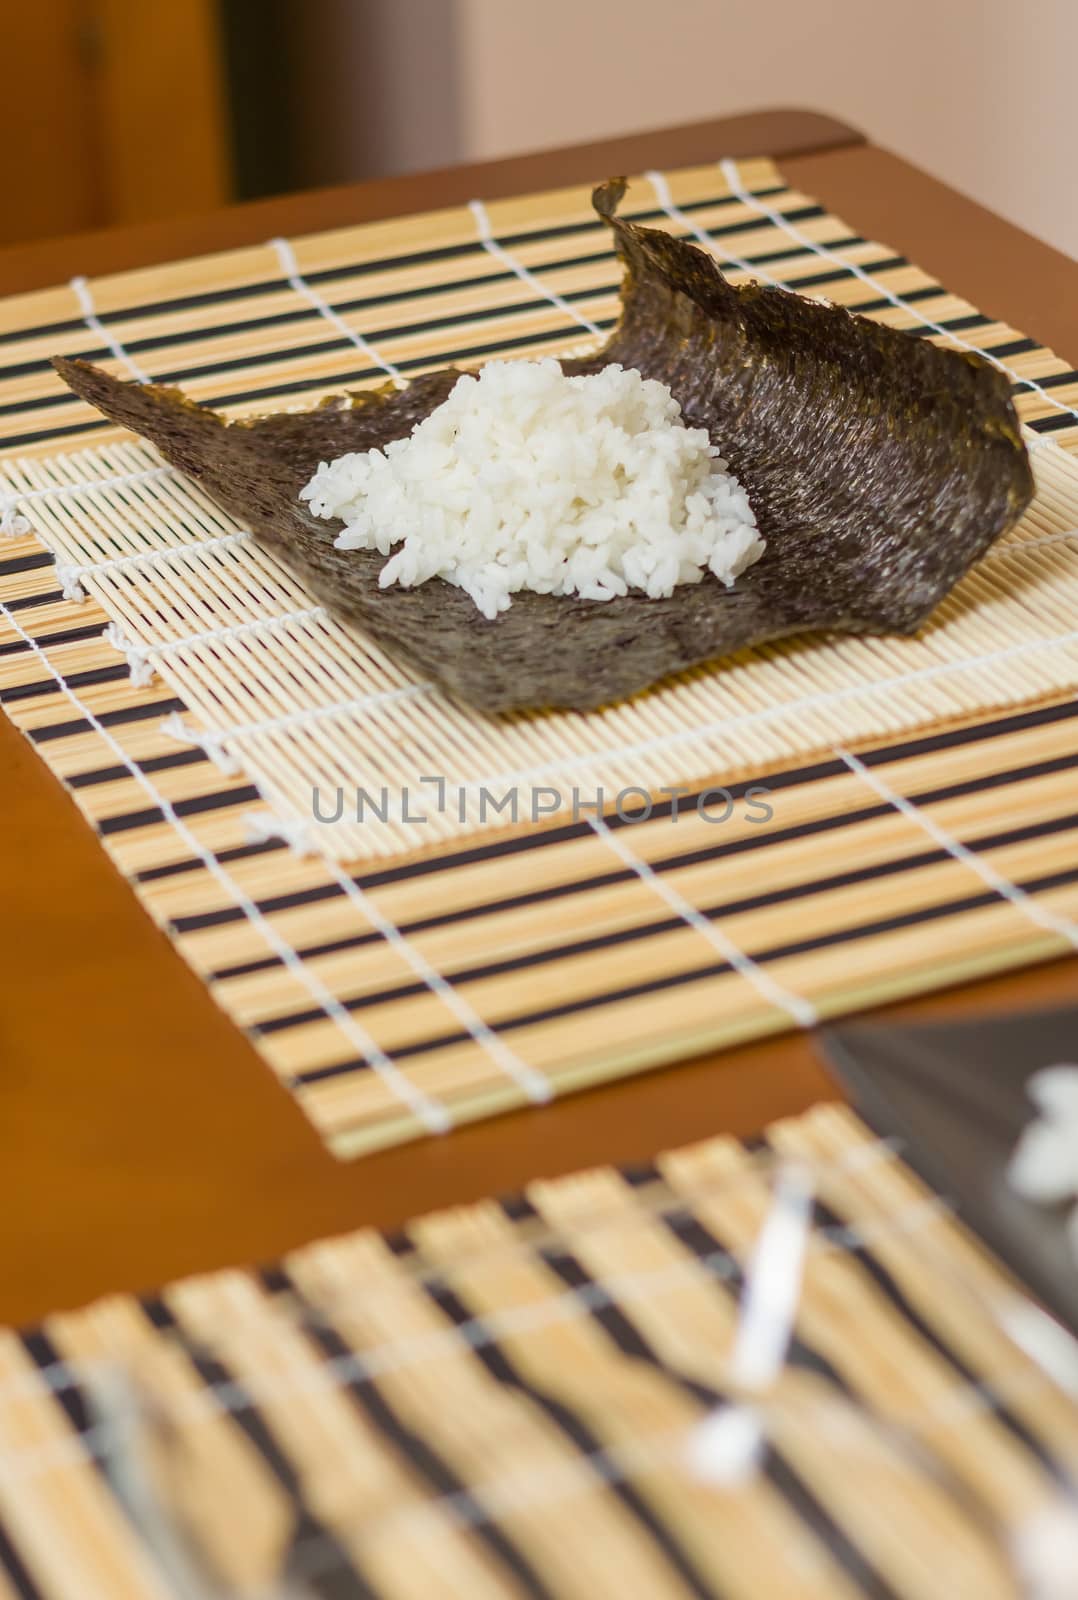 Nori seaweed sheet with rice above ready to make japanese sushi rolls